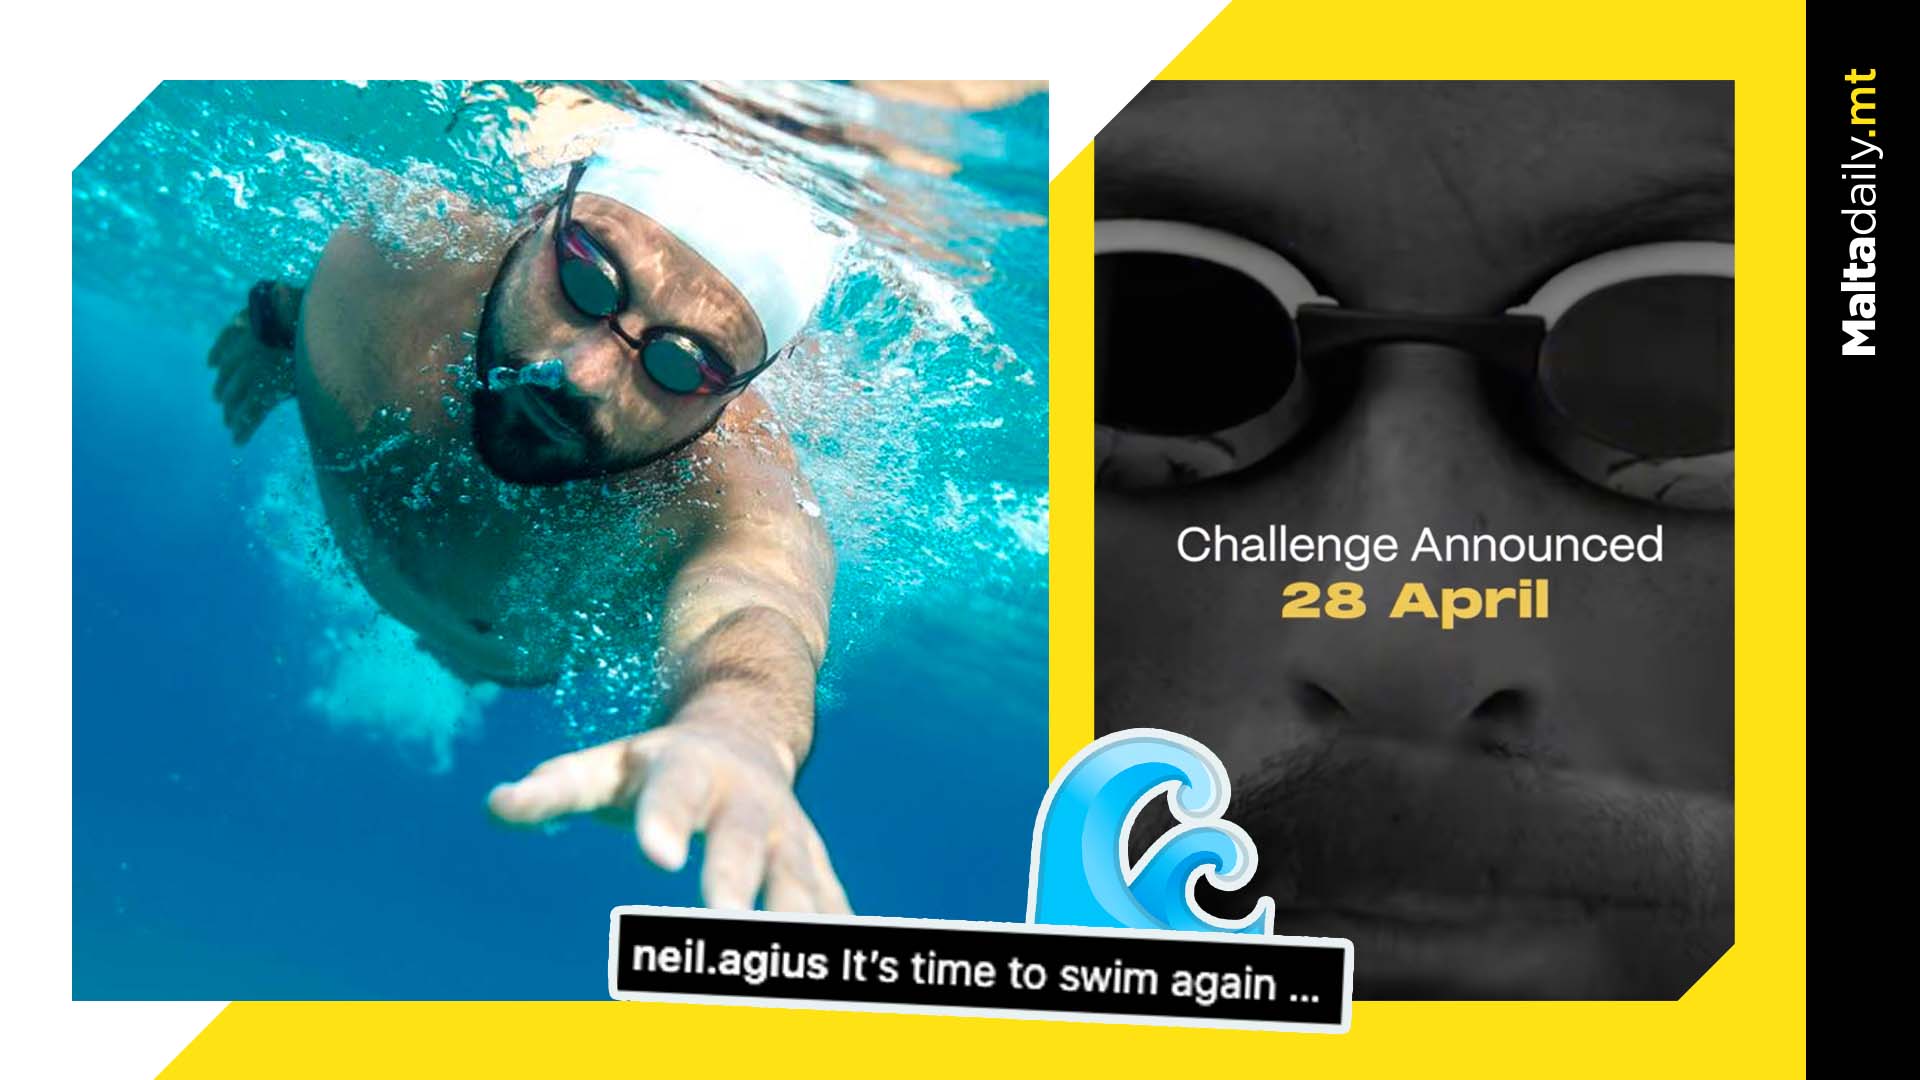 Neil Agius announces its time to swim again on 28th April